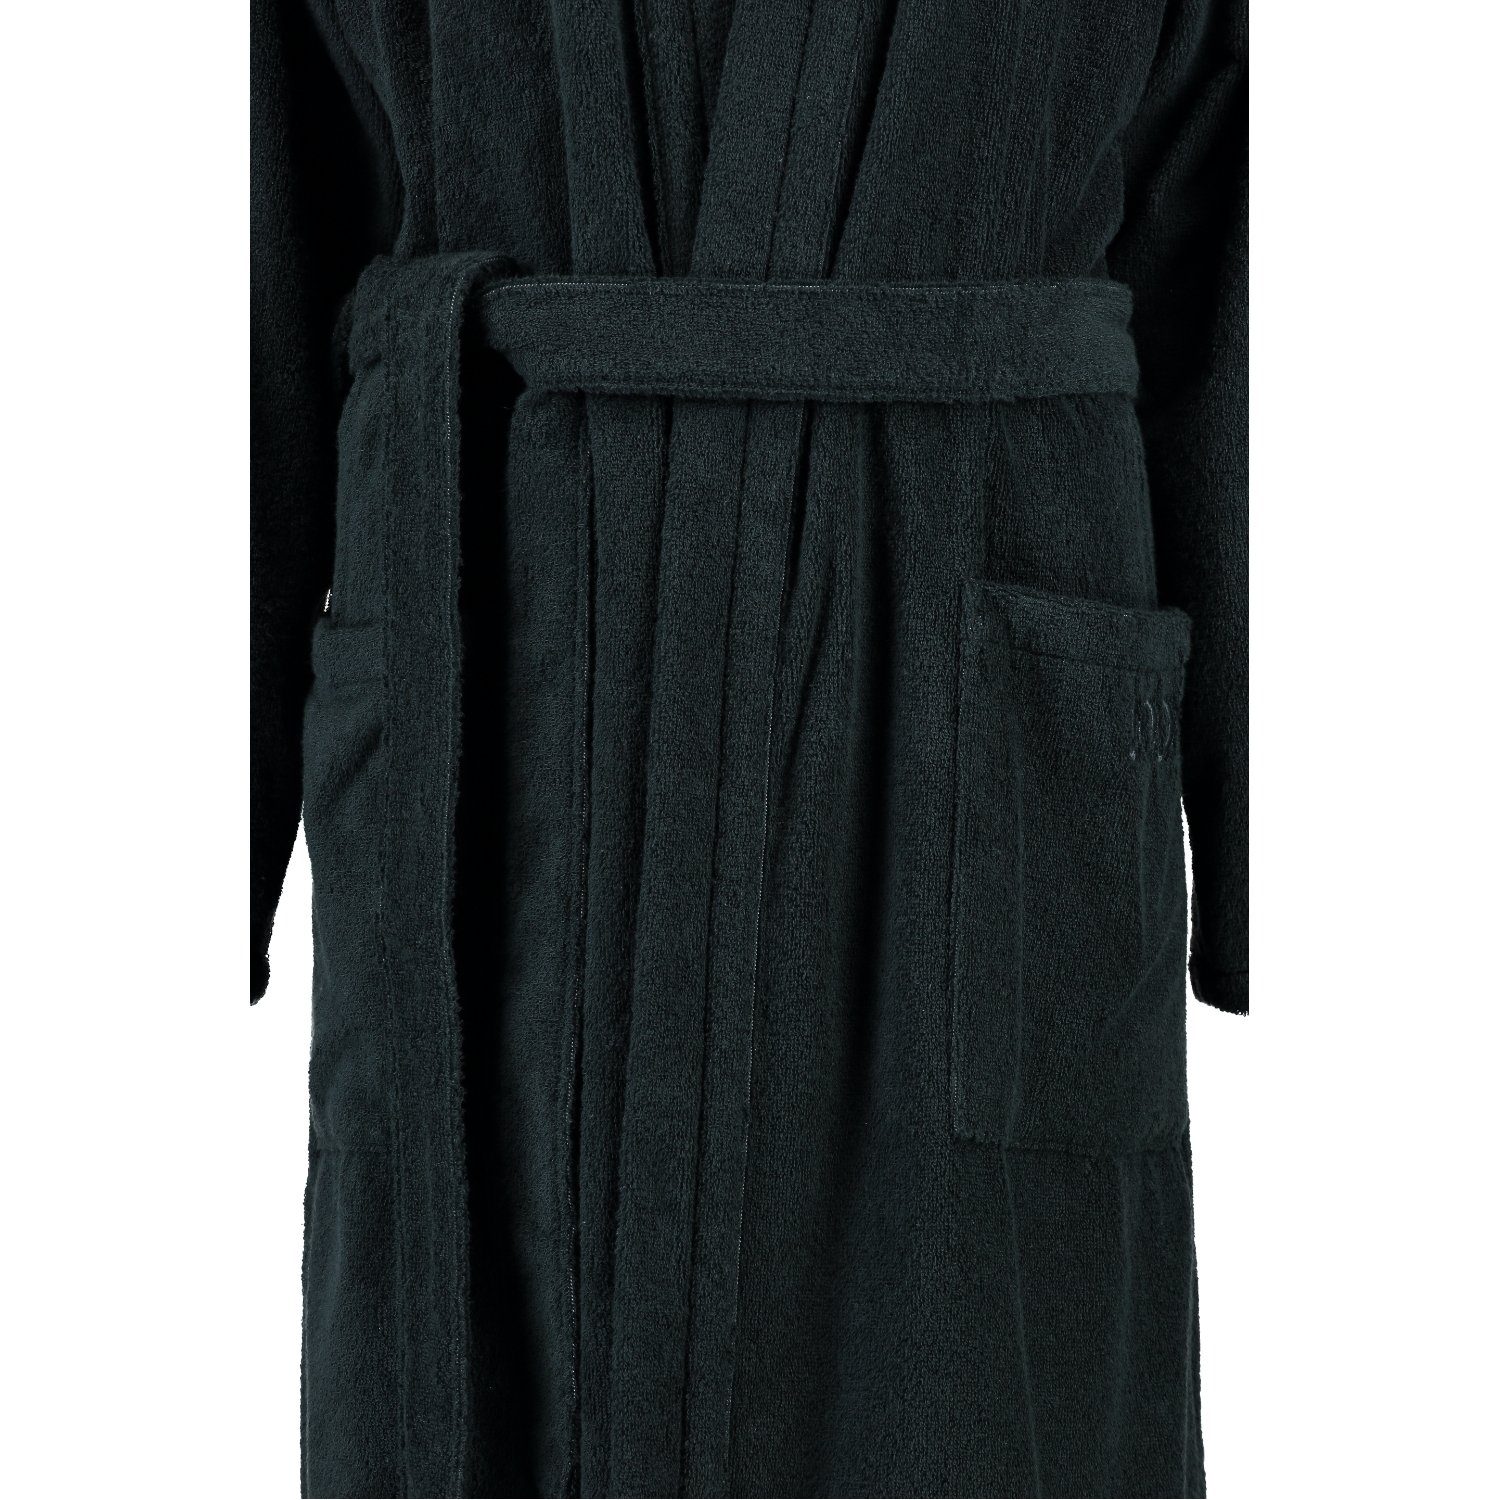 (97) Damenbademantel Schwarz Baumwolle Kimono Frottier, 100% Kimono, Joop! 1616 Classic